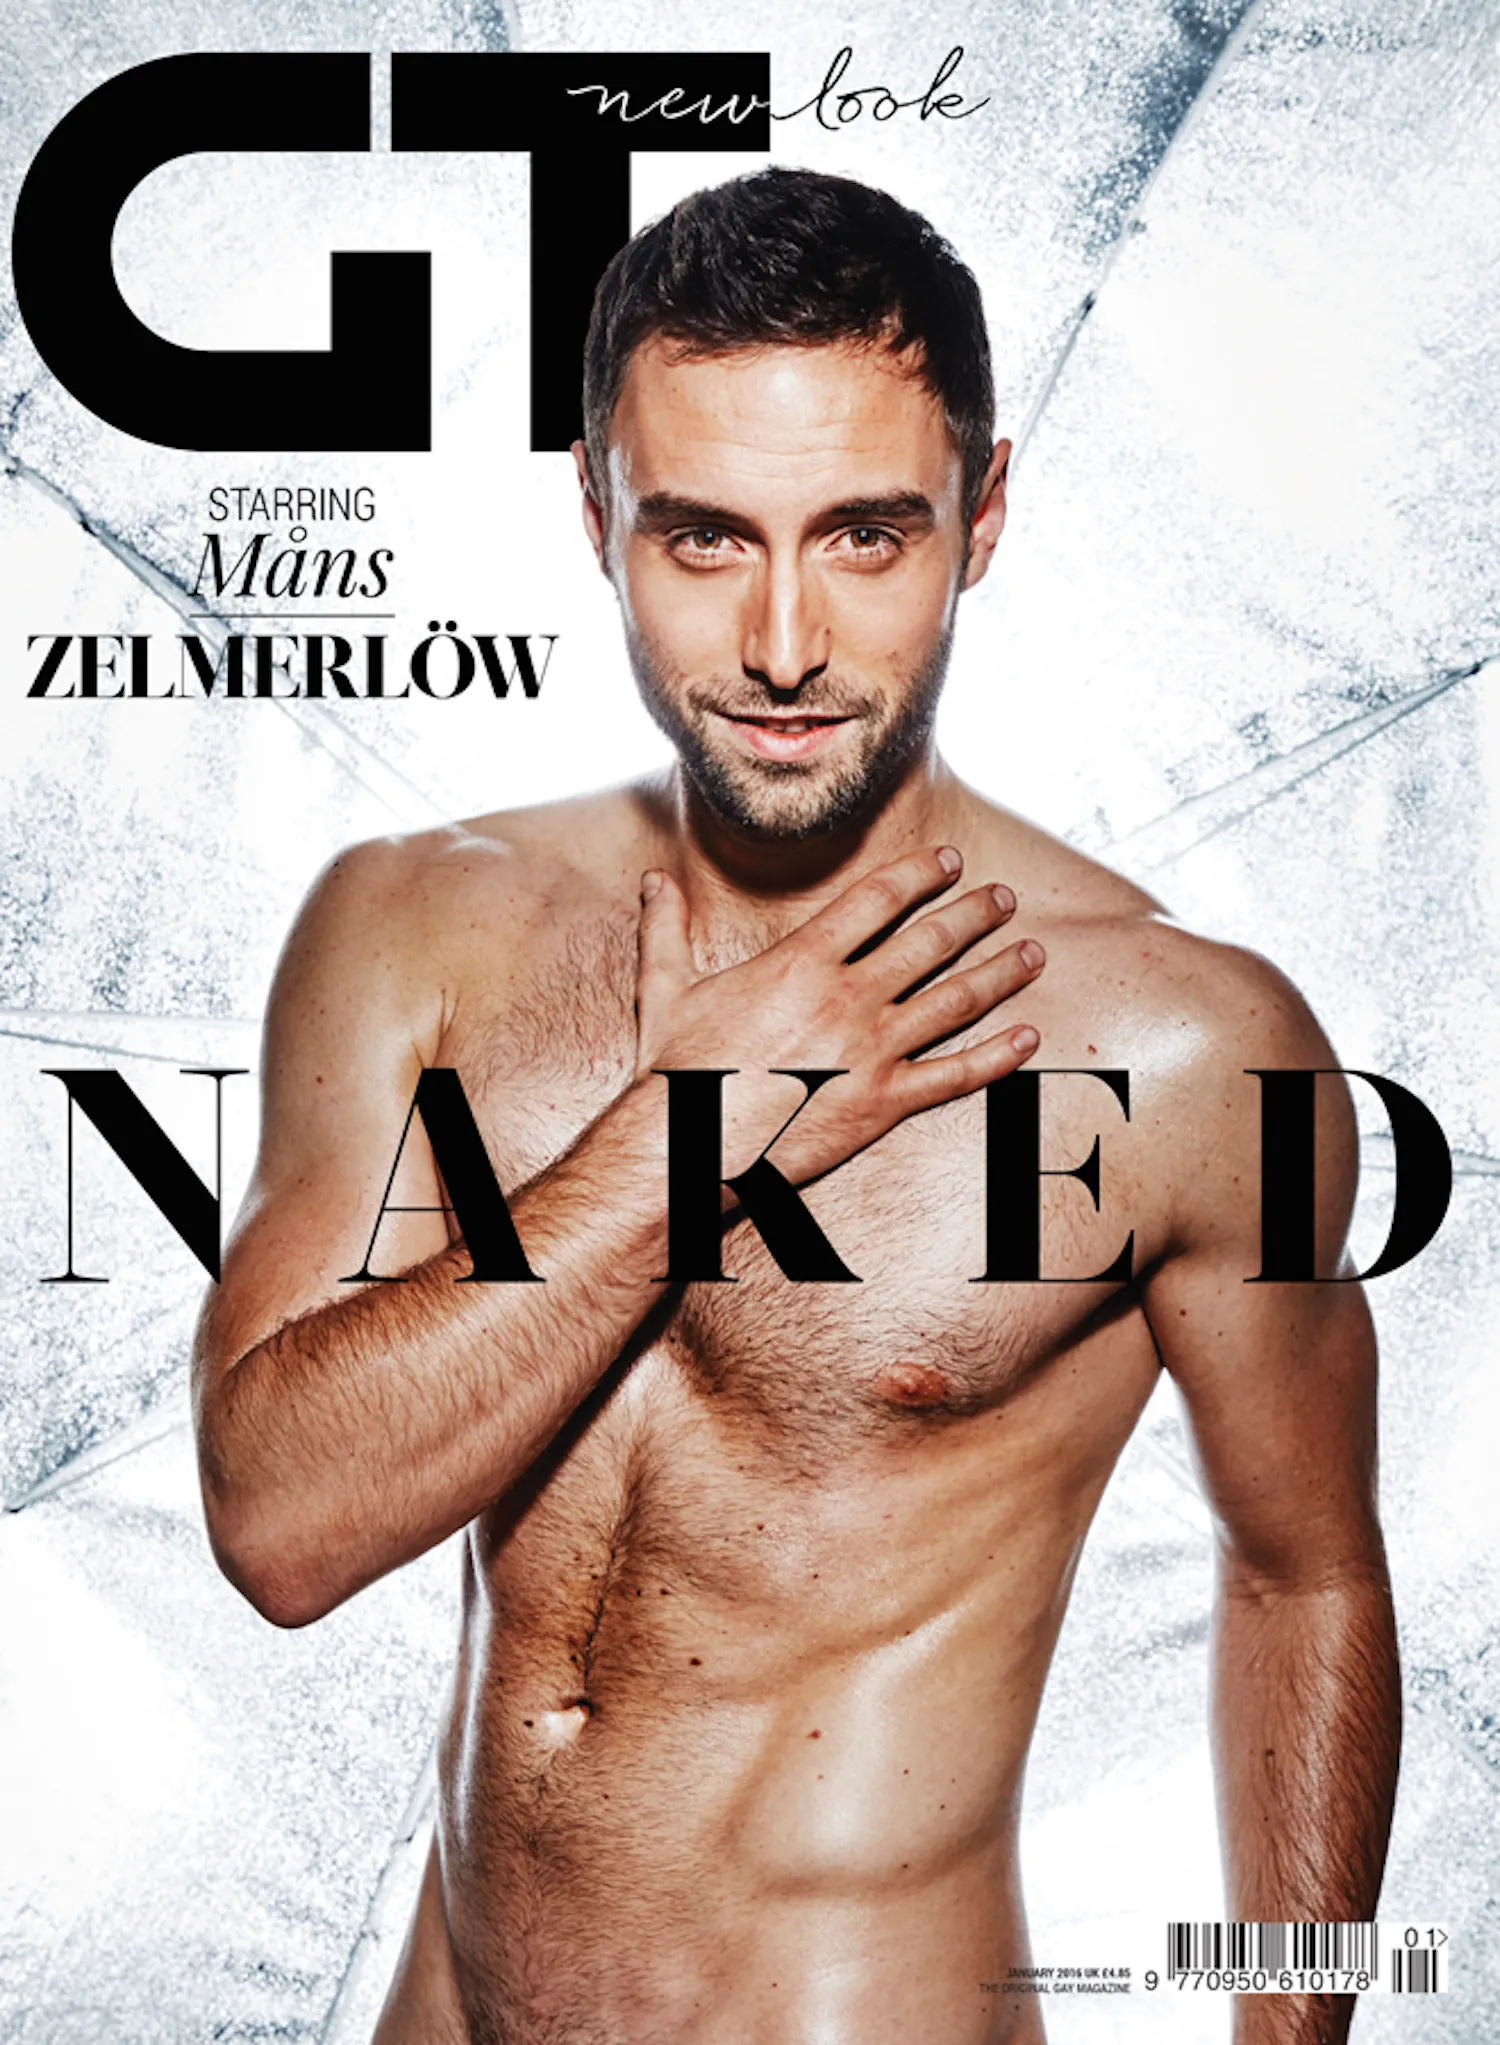 Eurovision winner Måns Zelmerlöw poses naked for gay mag 